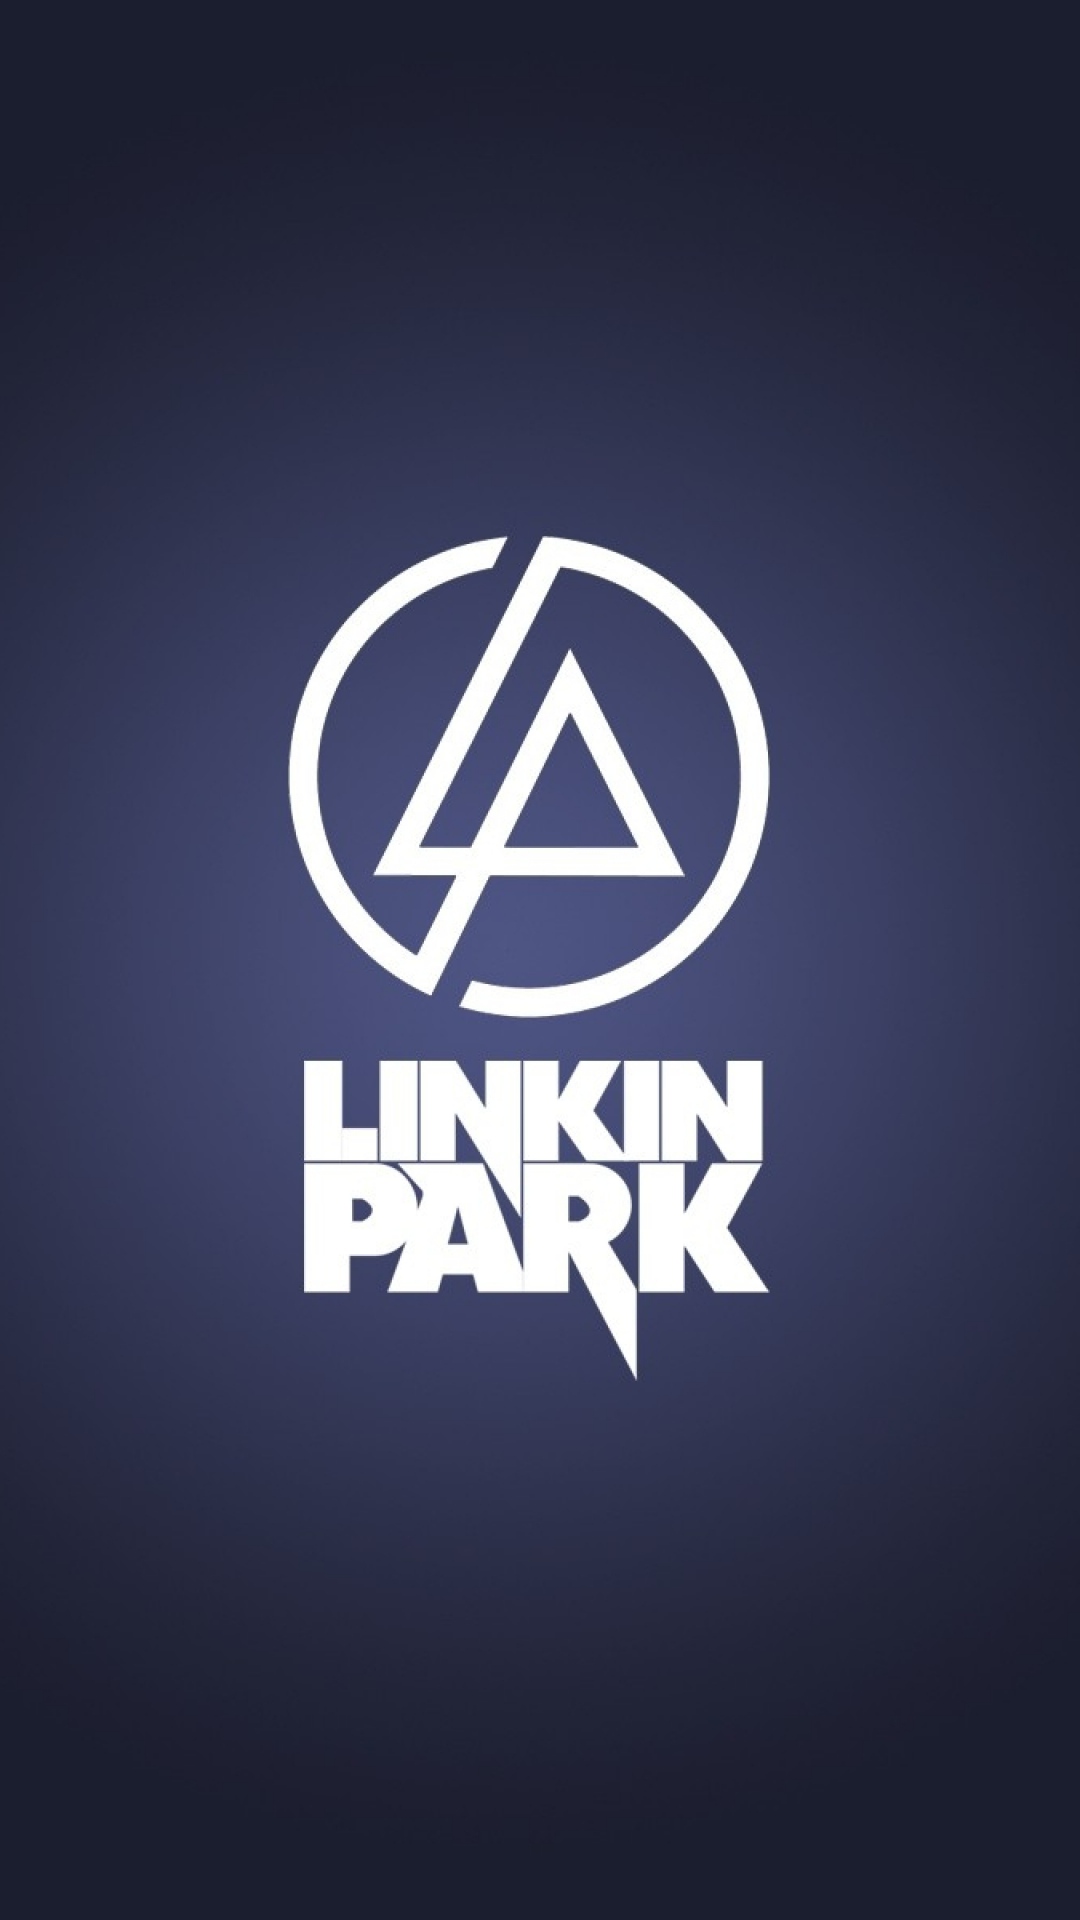 Linkin Park Rock Band Logos